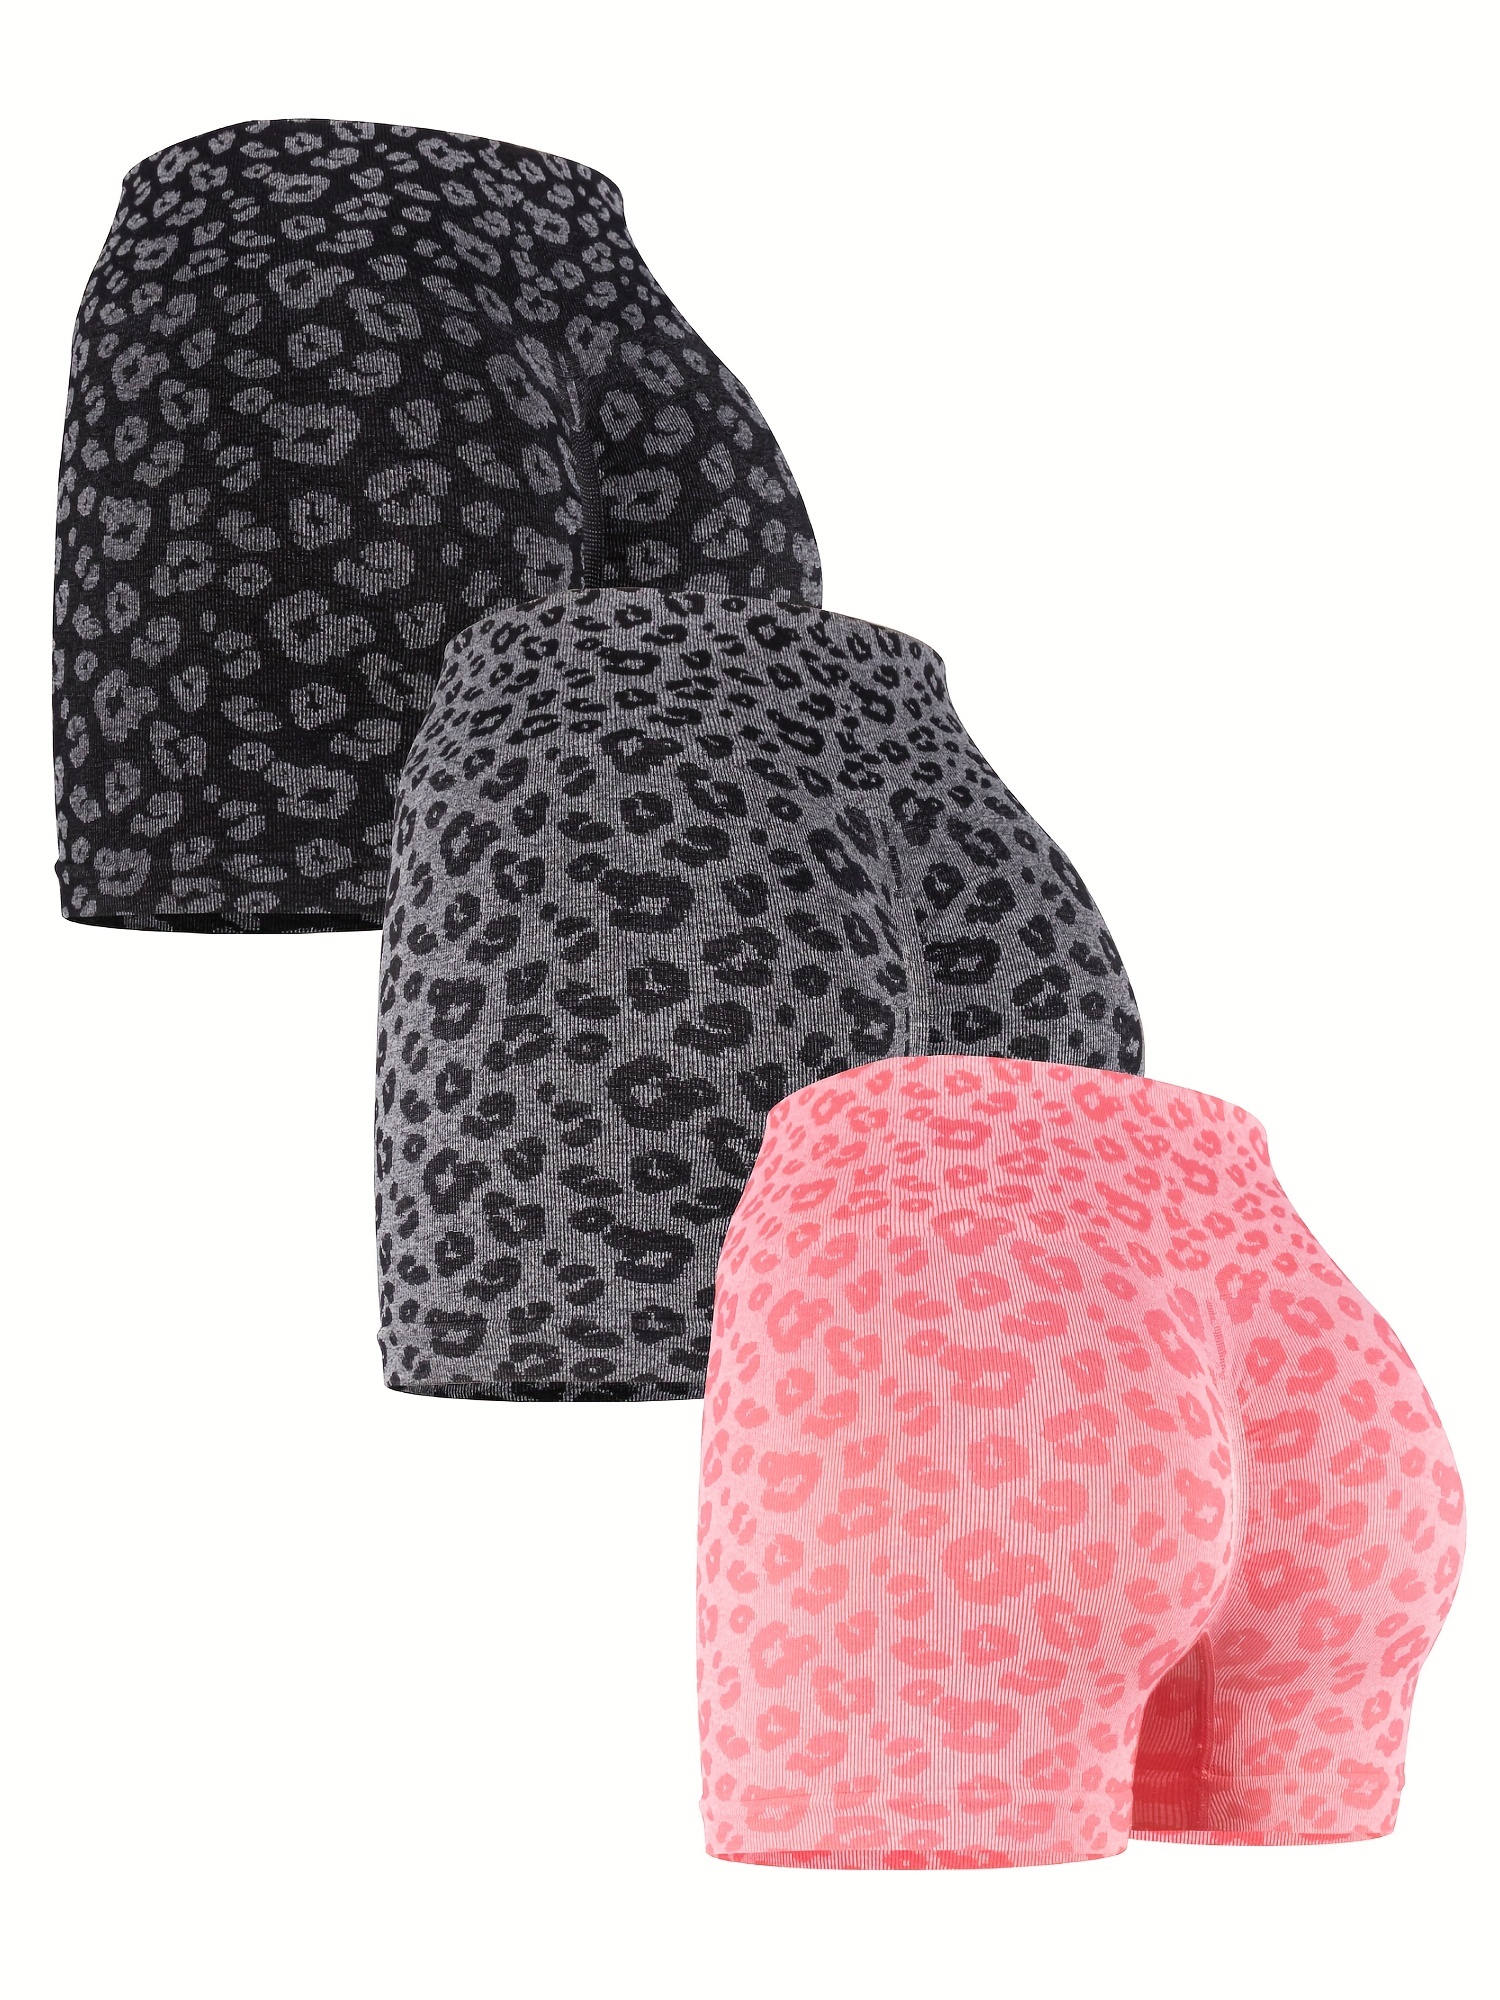 High Waisted Yoga Shorts for Women Tummy Control Workout Running Biker  Shorts, Leopard Print, XL price in UAE,  UAE